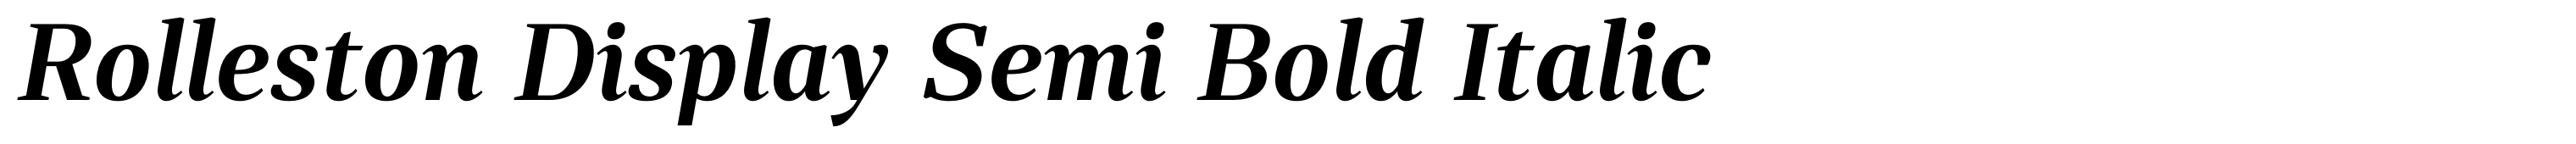 Rolleston Display Semi Bold Italic